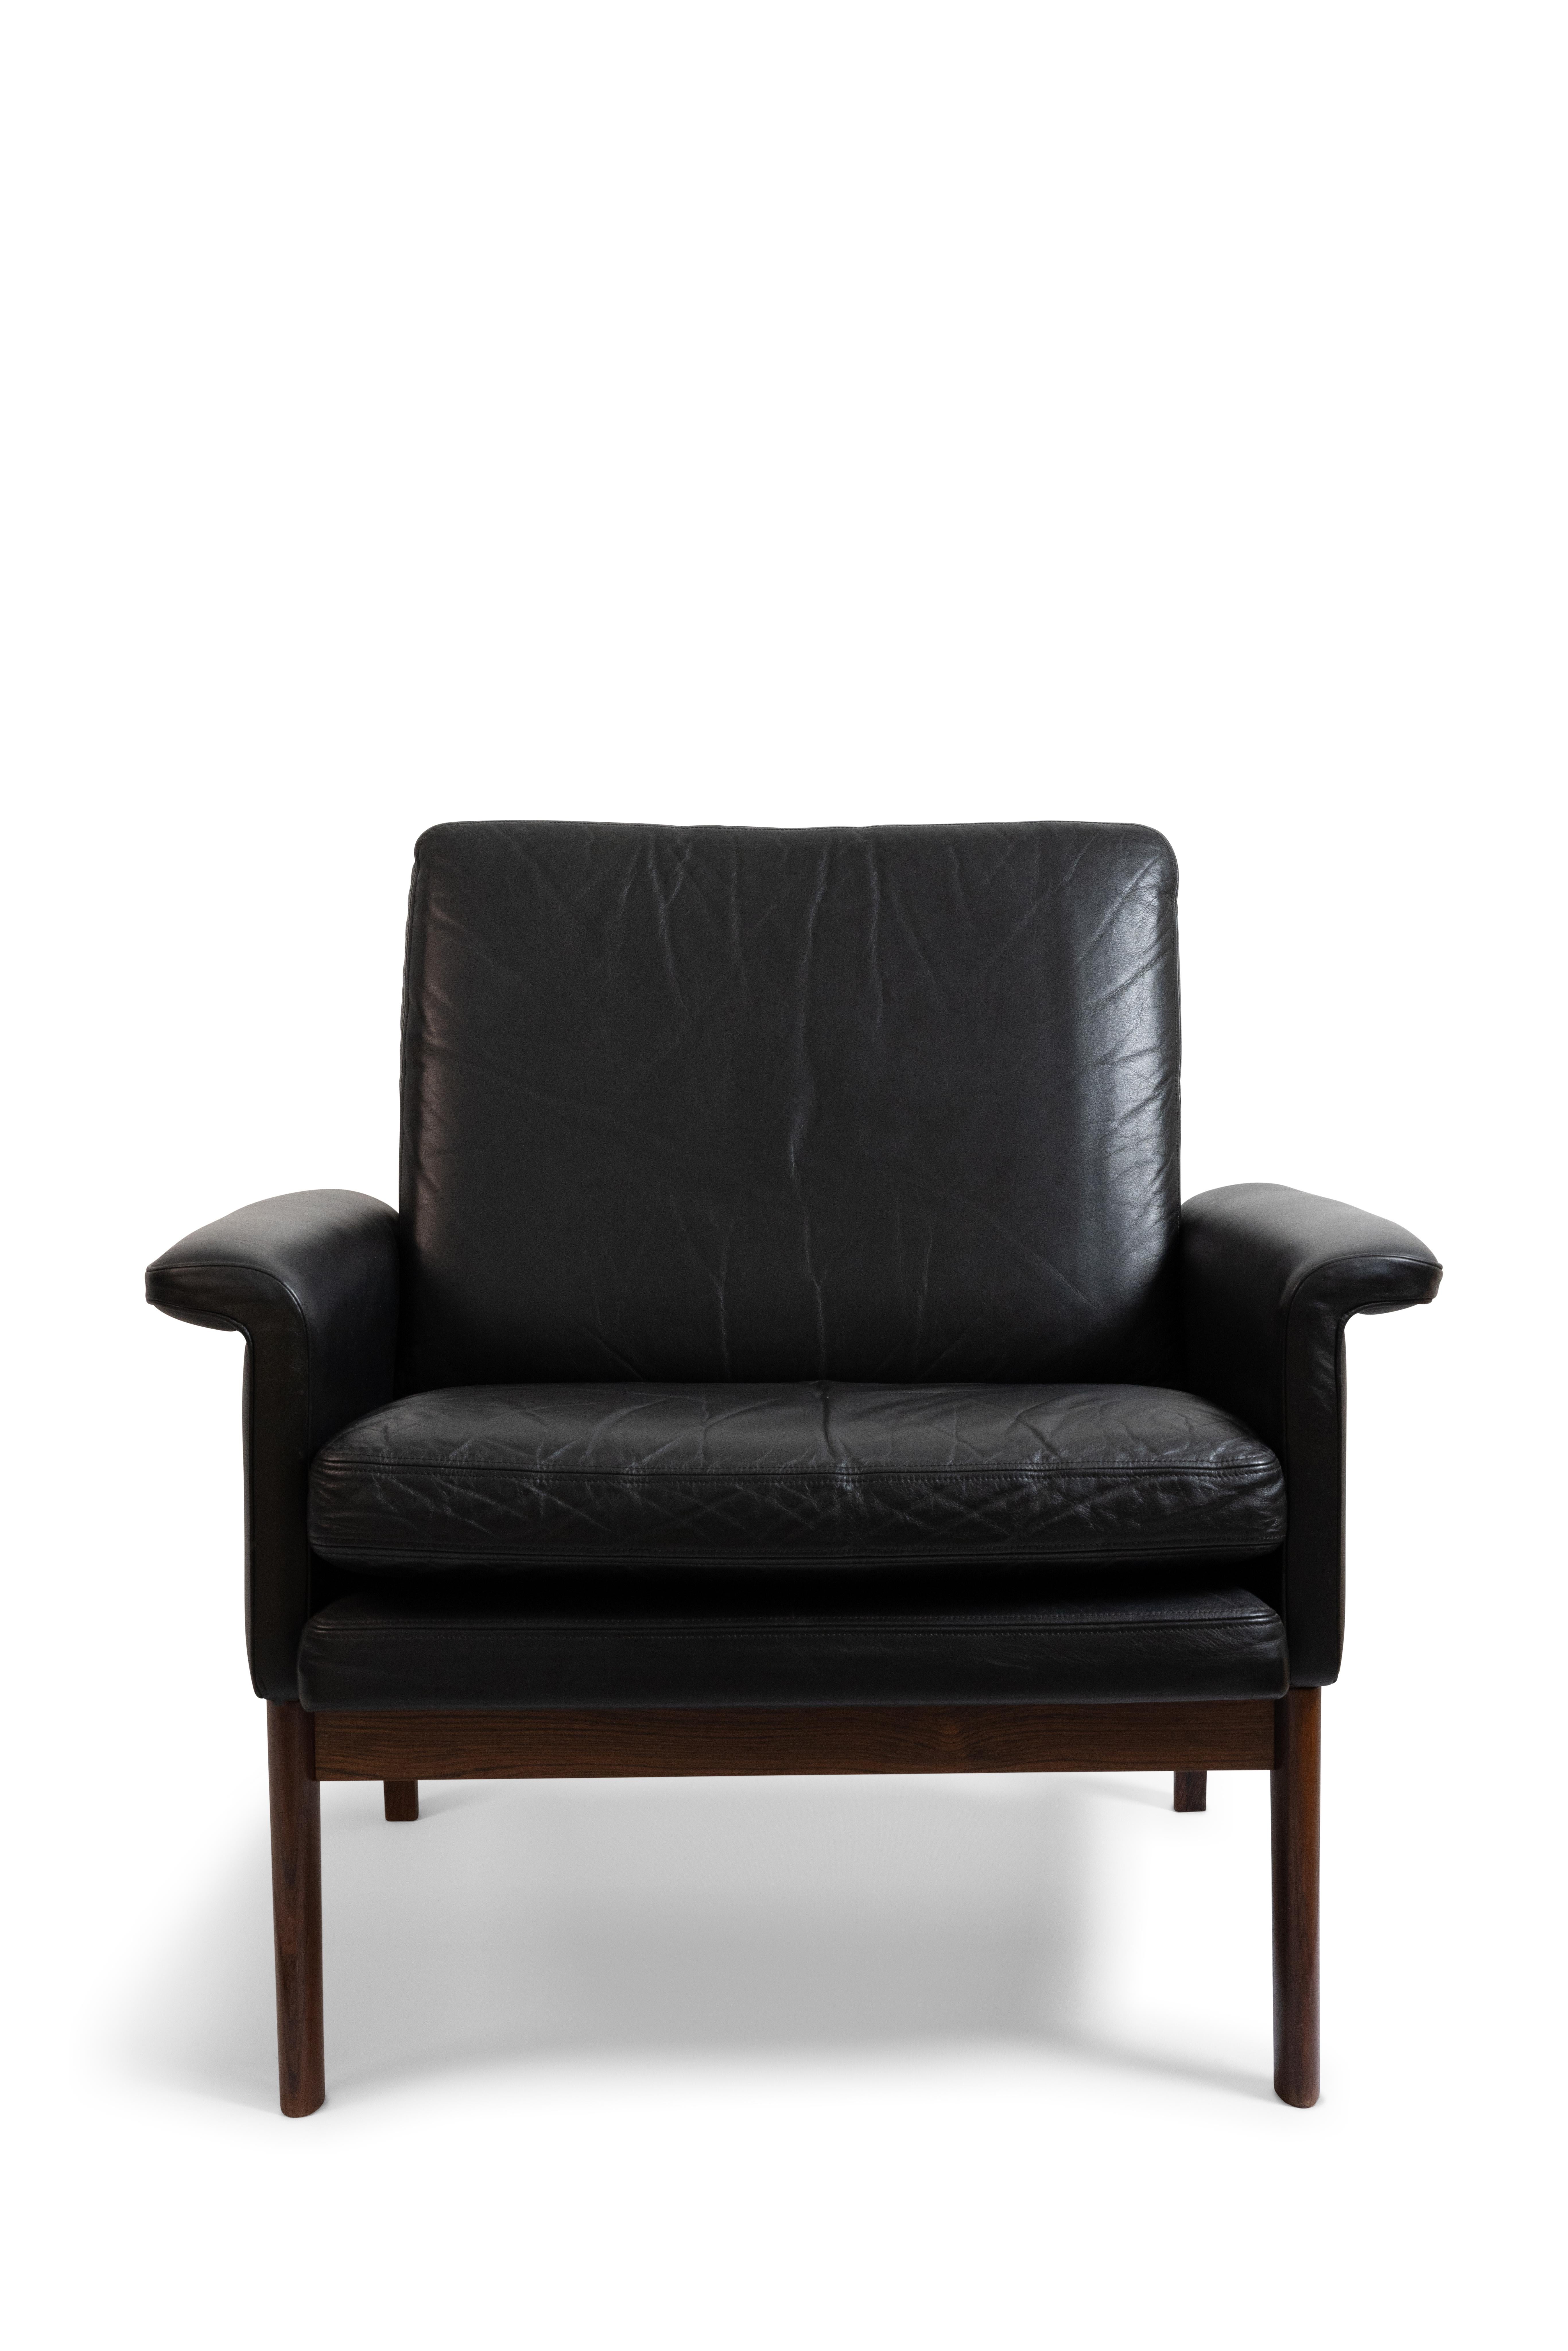 Danish Finn Juhl Three Seat Sofa with Original Black Leather, Model 218/3, Denmark For Sale